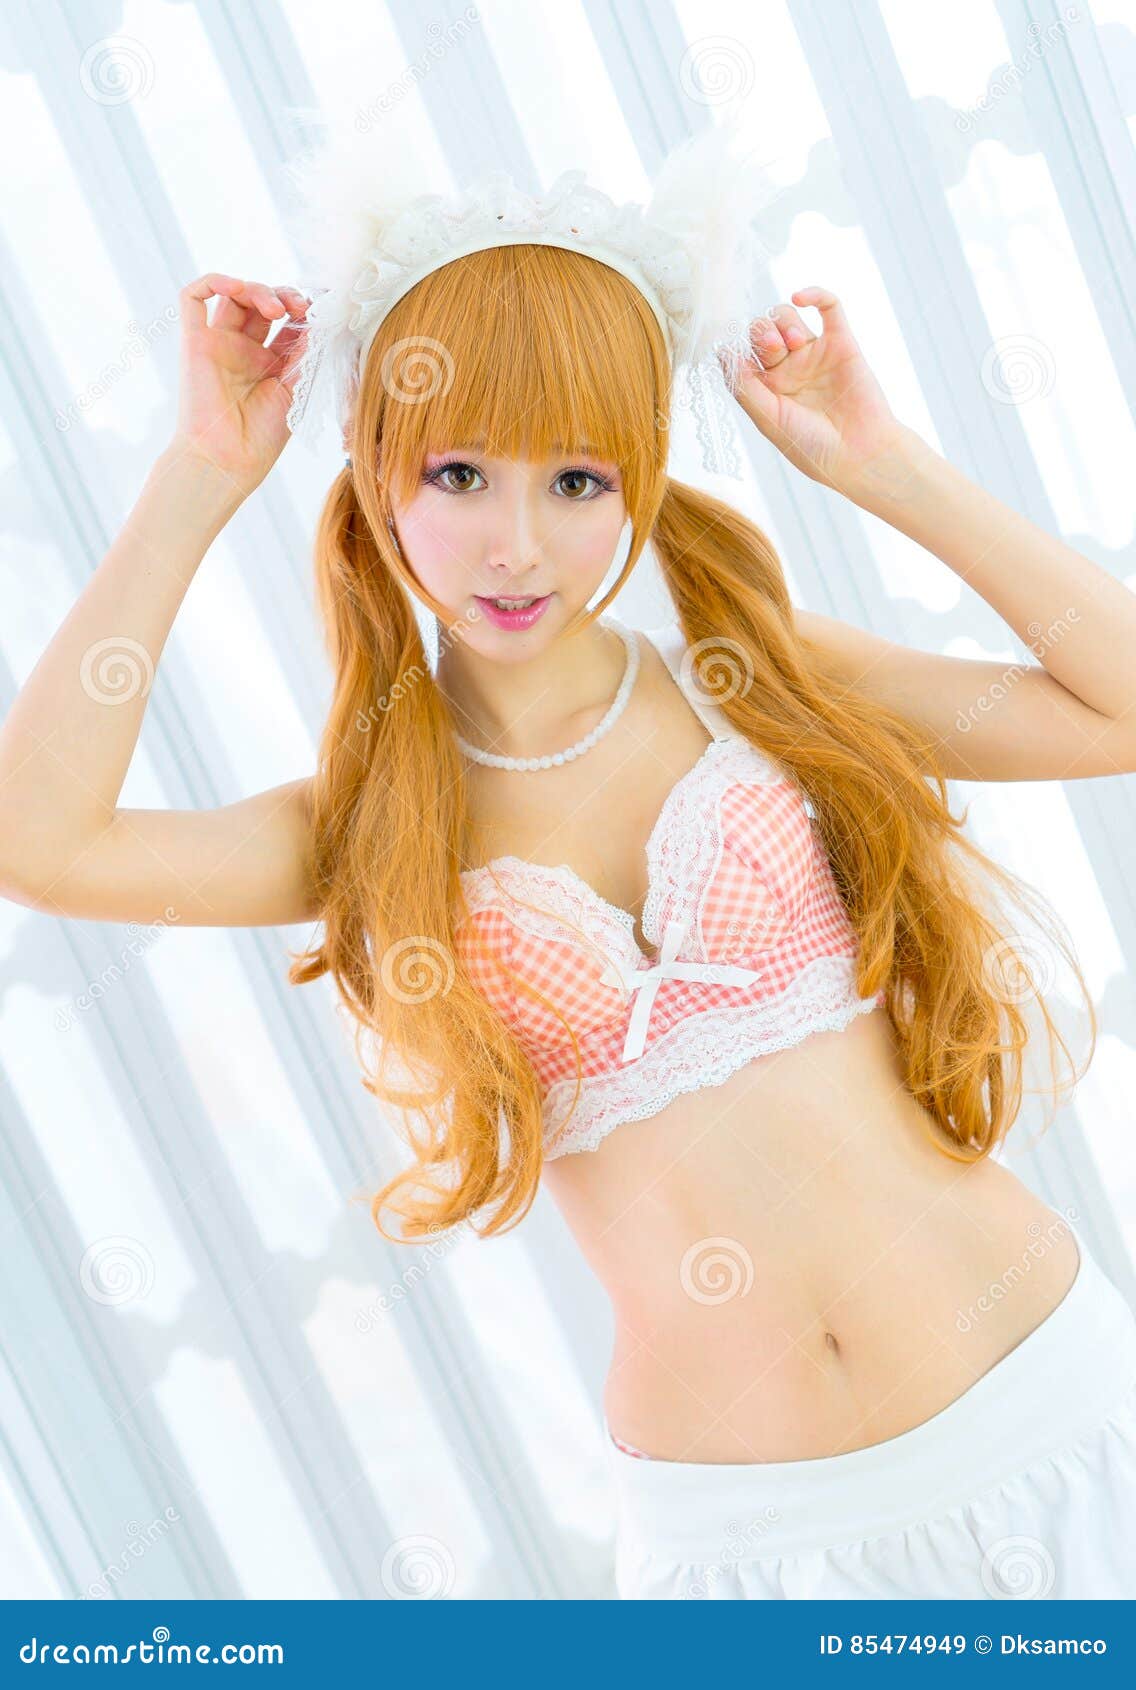 japanese wife swap porn